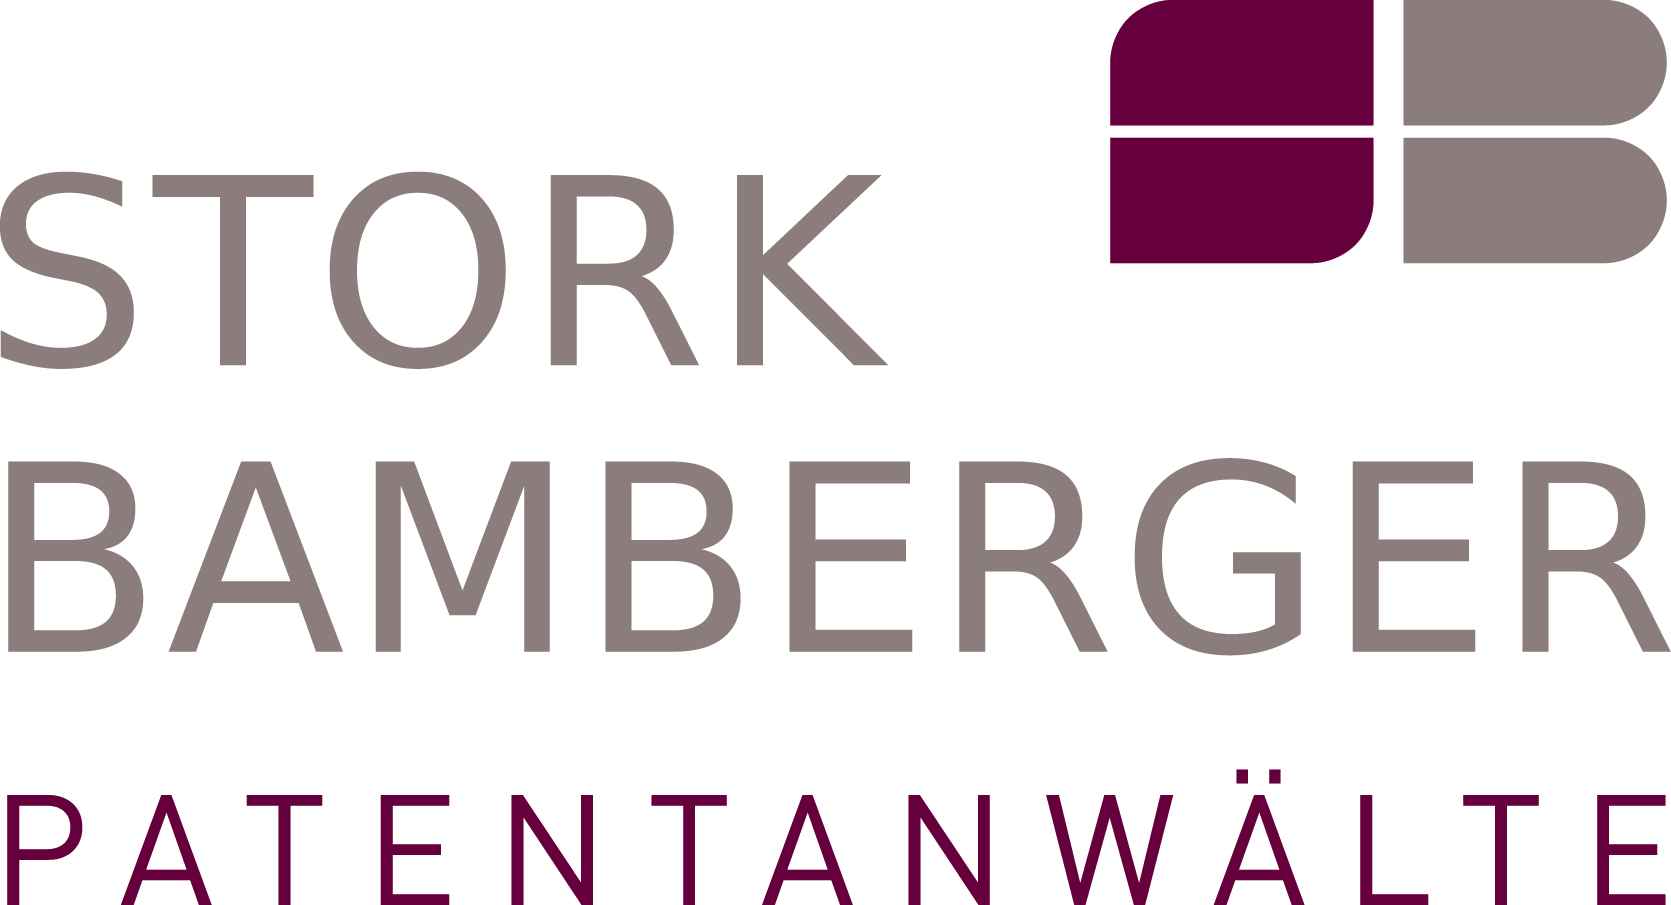 logo-stork-bamberger-patentabwalte-corporates-startup-city-hamburg.jpg logo